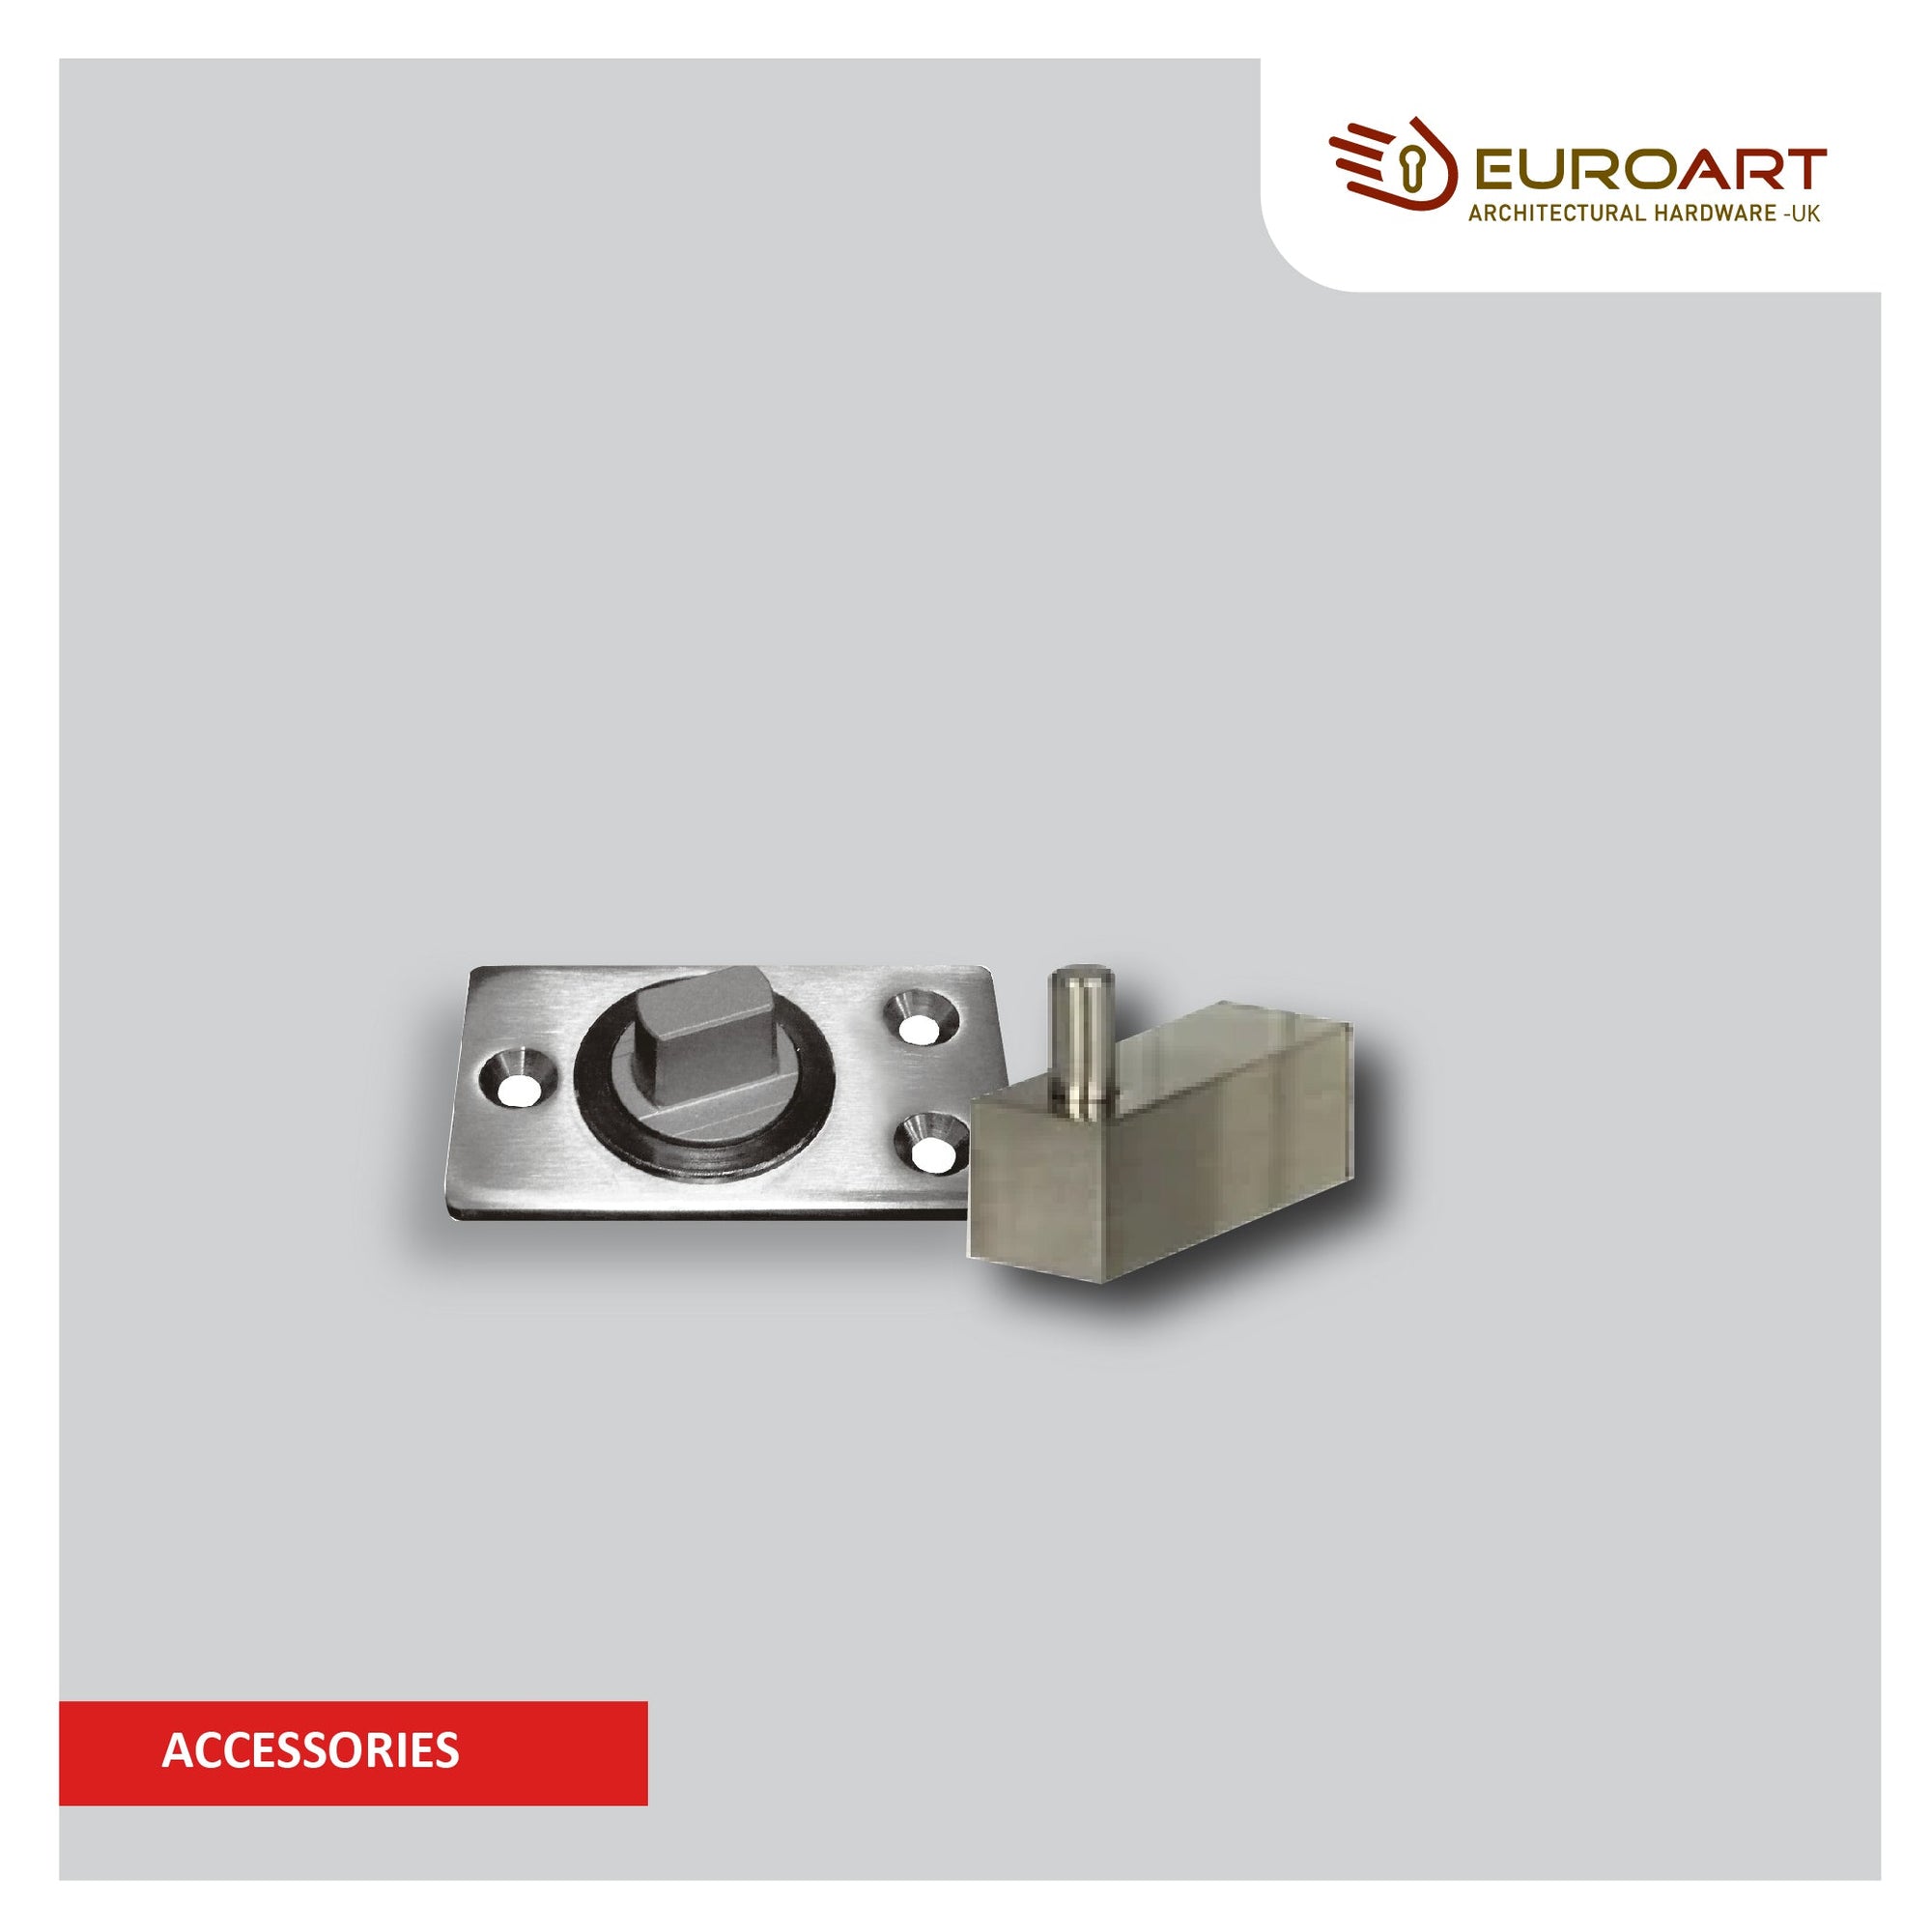 EuroArt Accessories - Enhance Your Interior